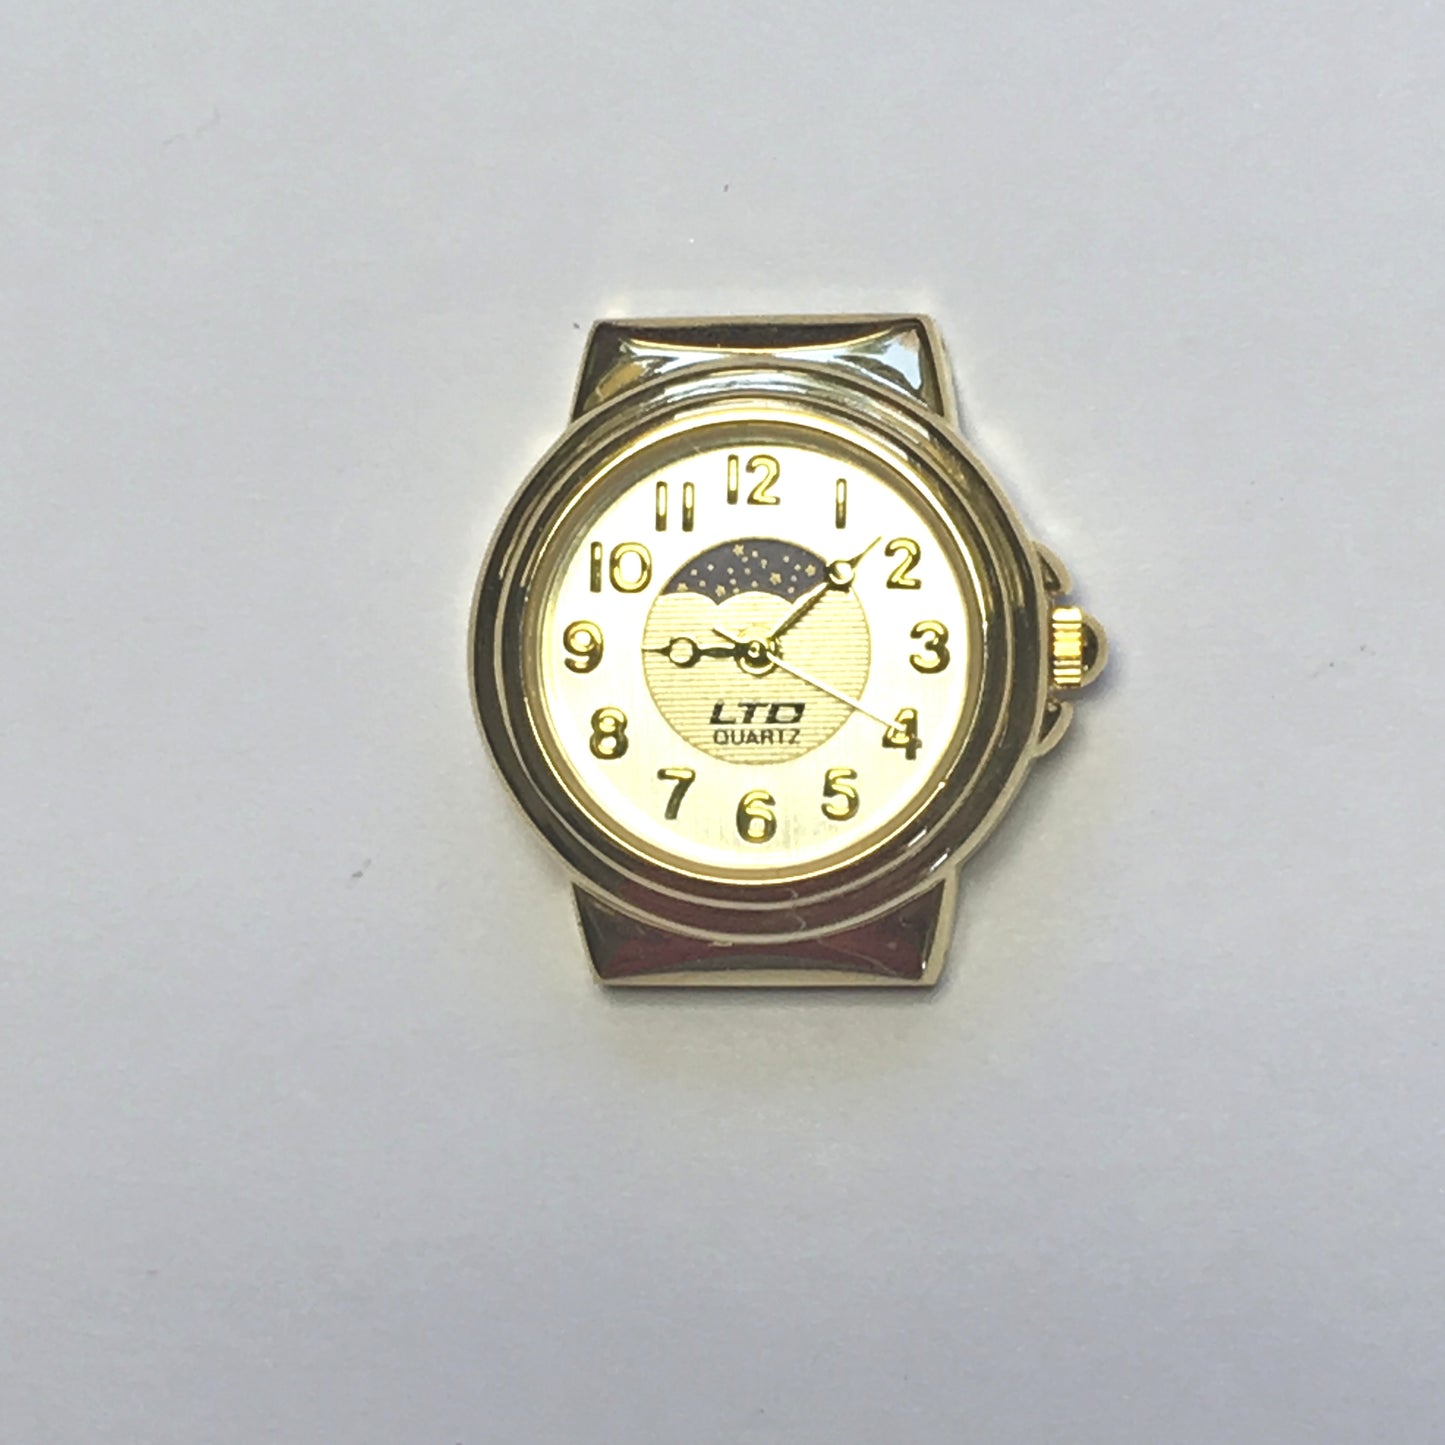 Gold LTD Quartz Sun/Moon Watch Face with Pins, 29 x 27 mm, New, No Scratches